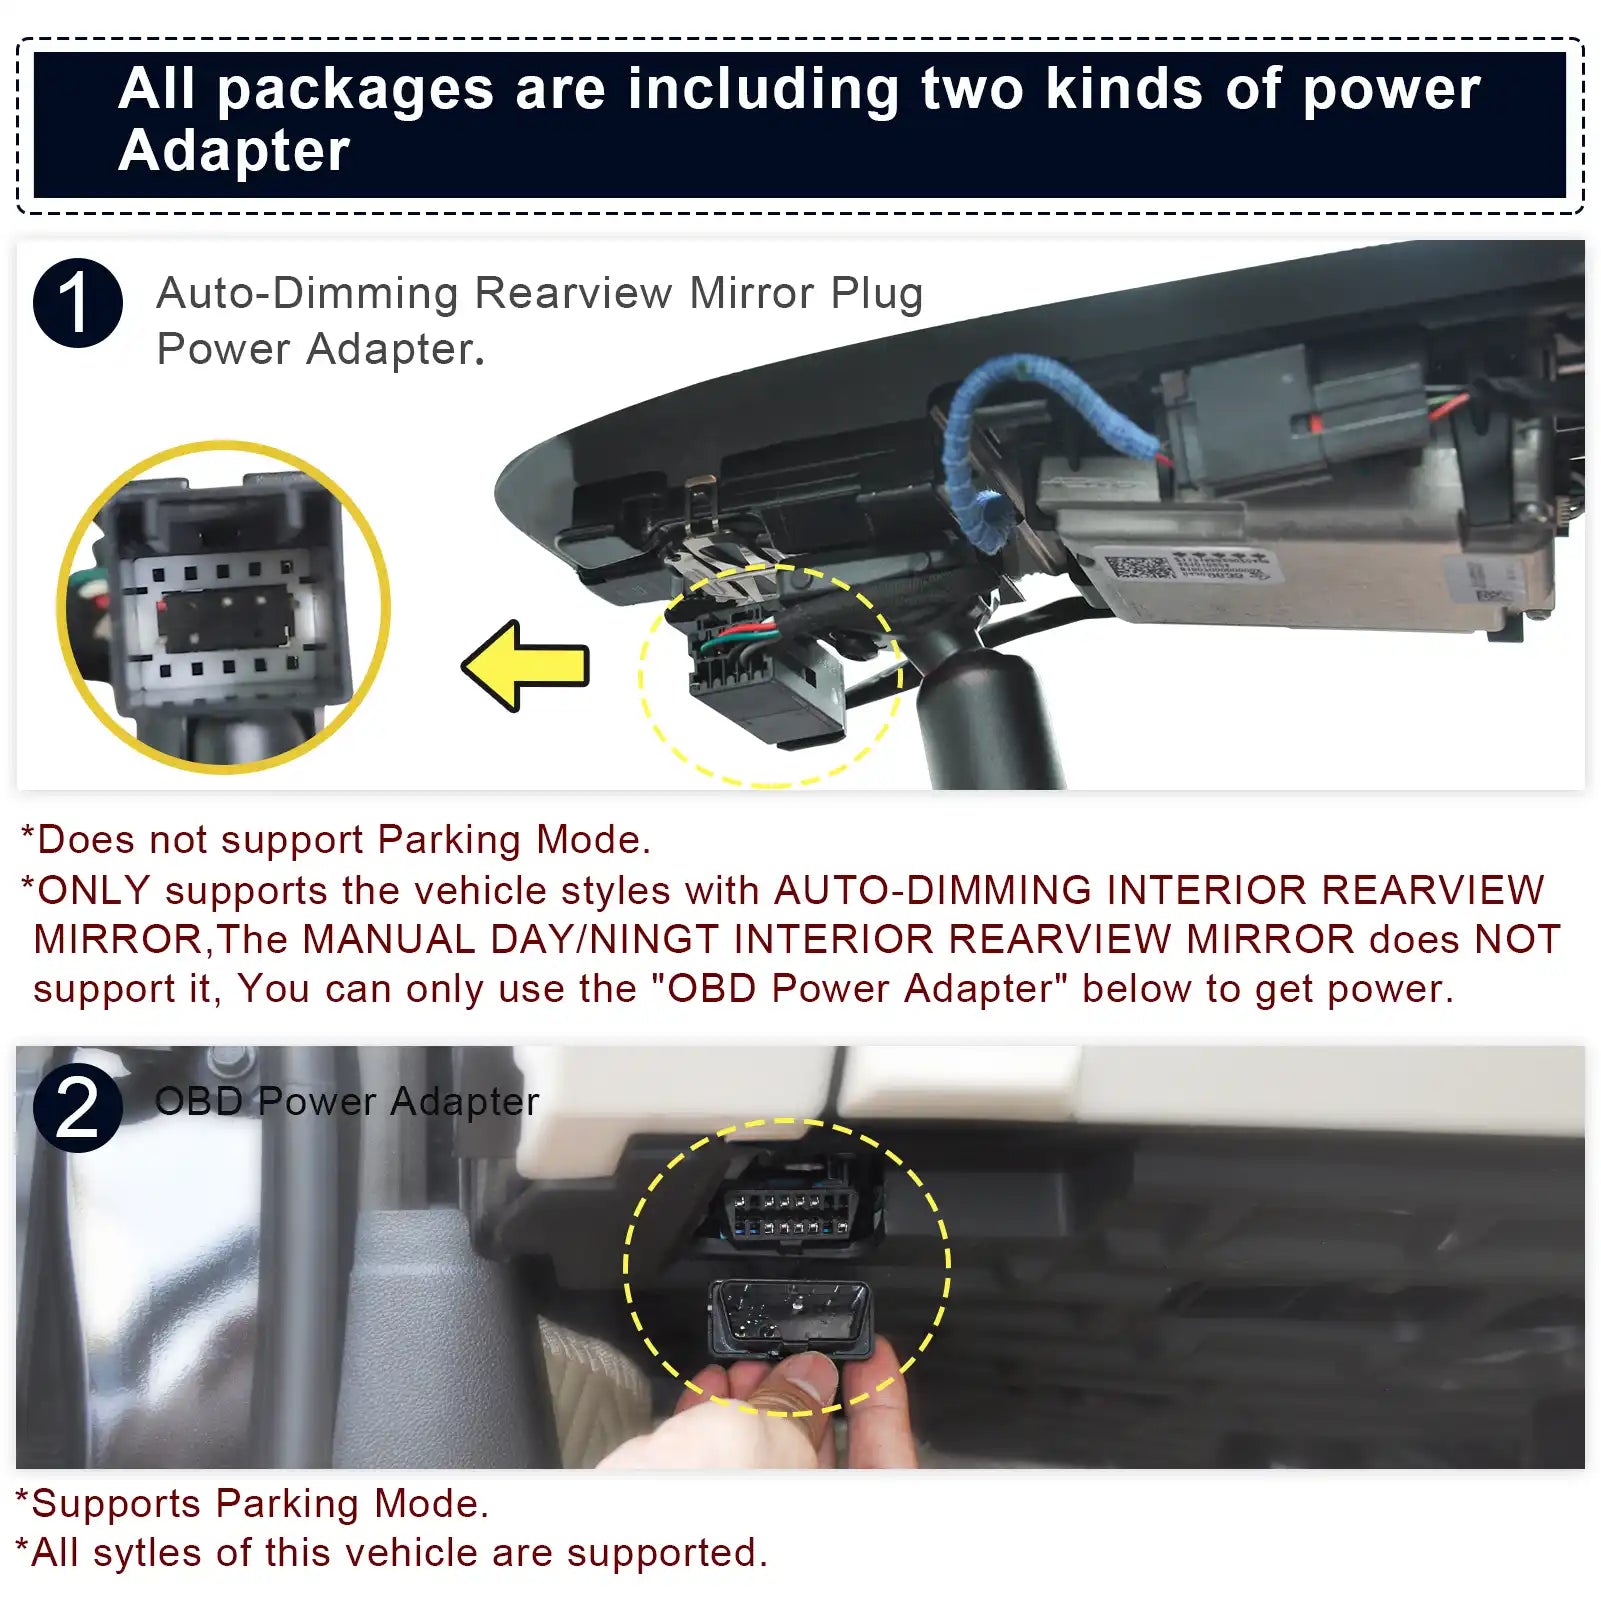 Chevy Blazer dash cam OBD Power Adapter